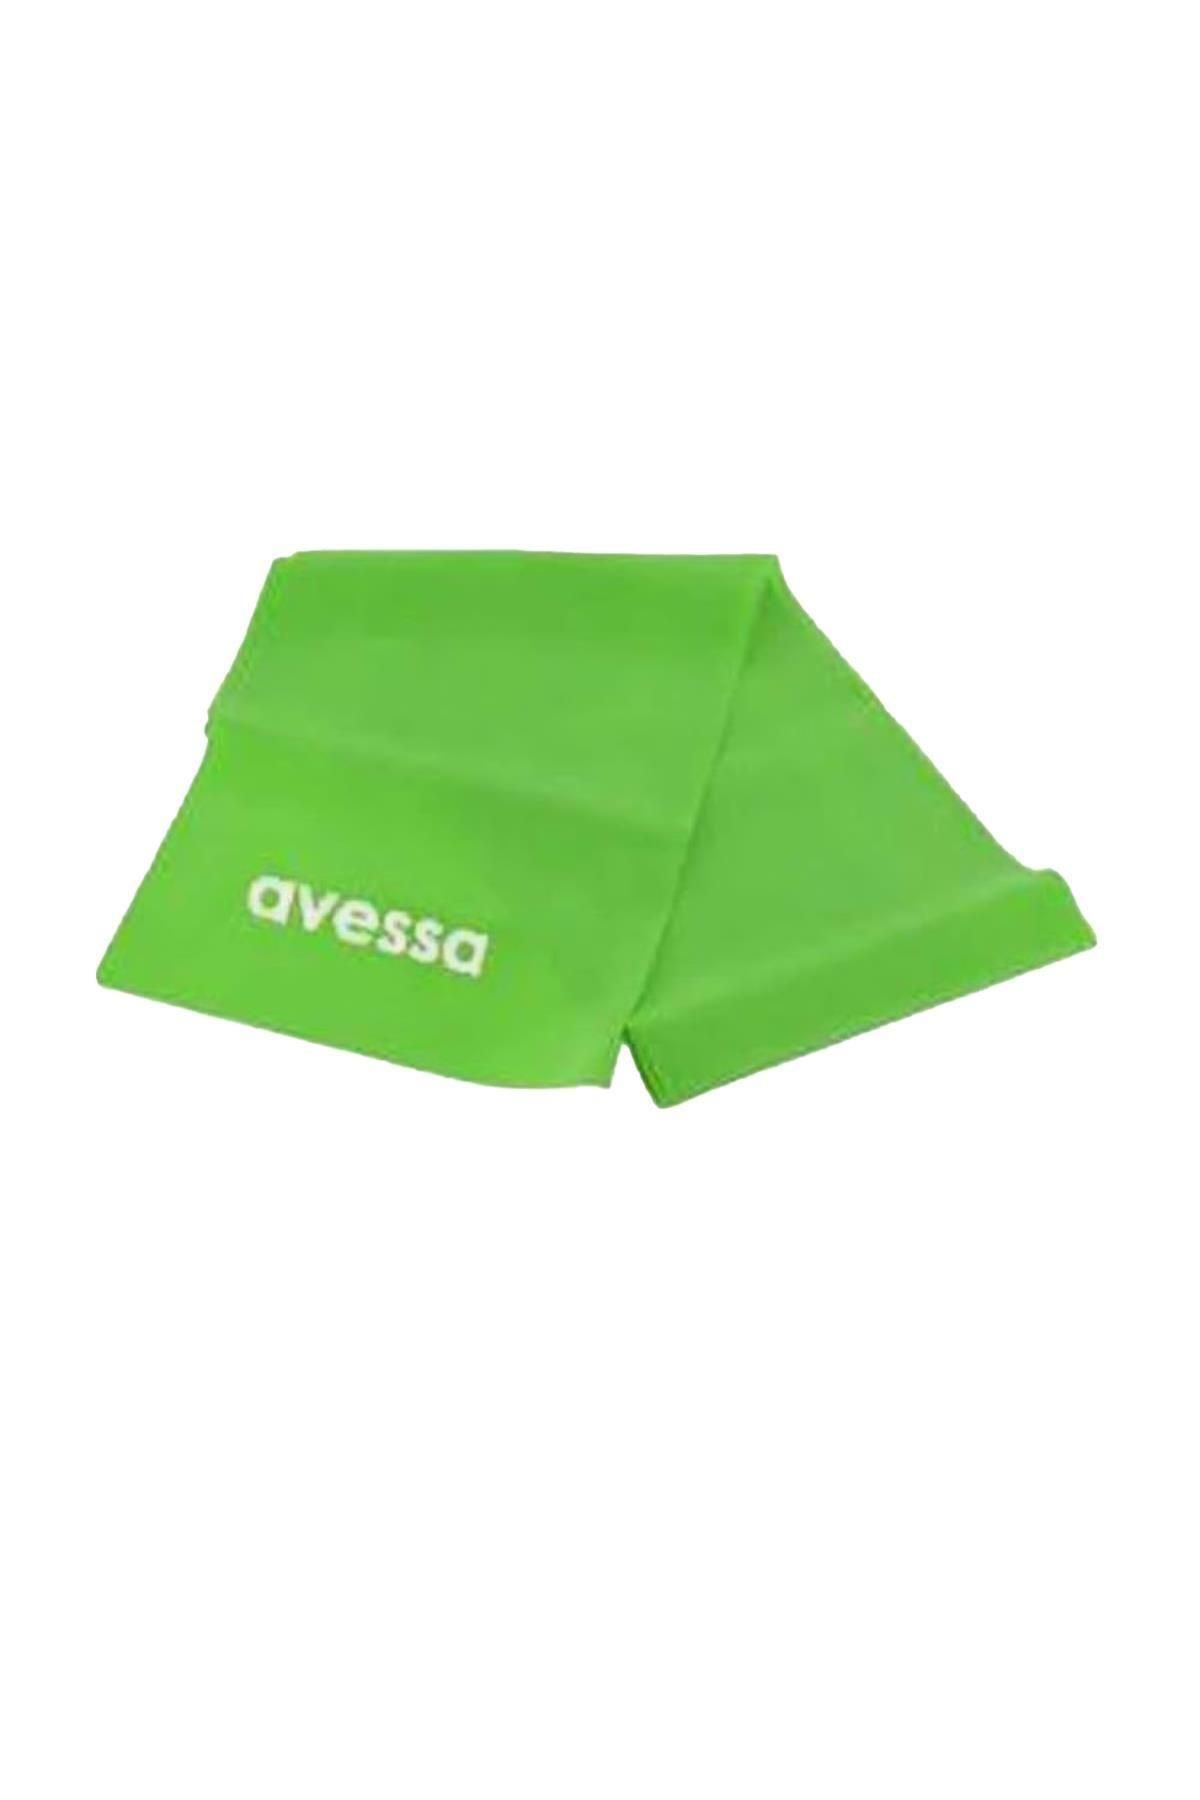 Avessa Pilates Bandı Orta Sert 0.4 MM Yeşil